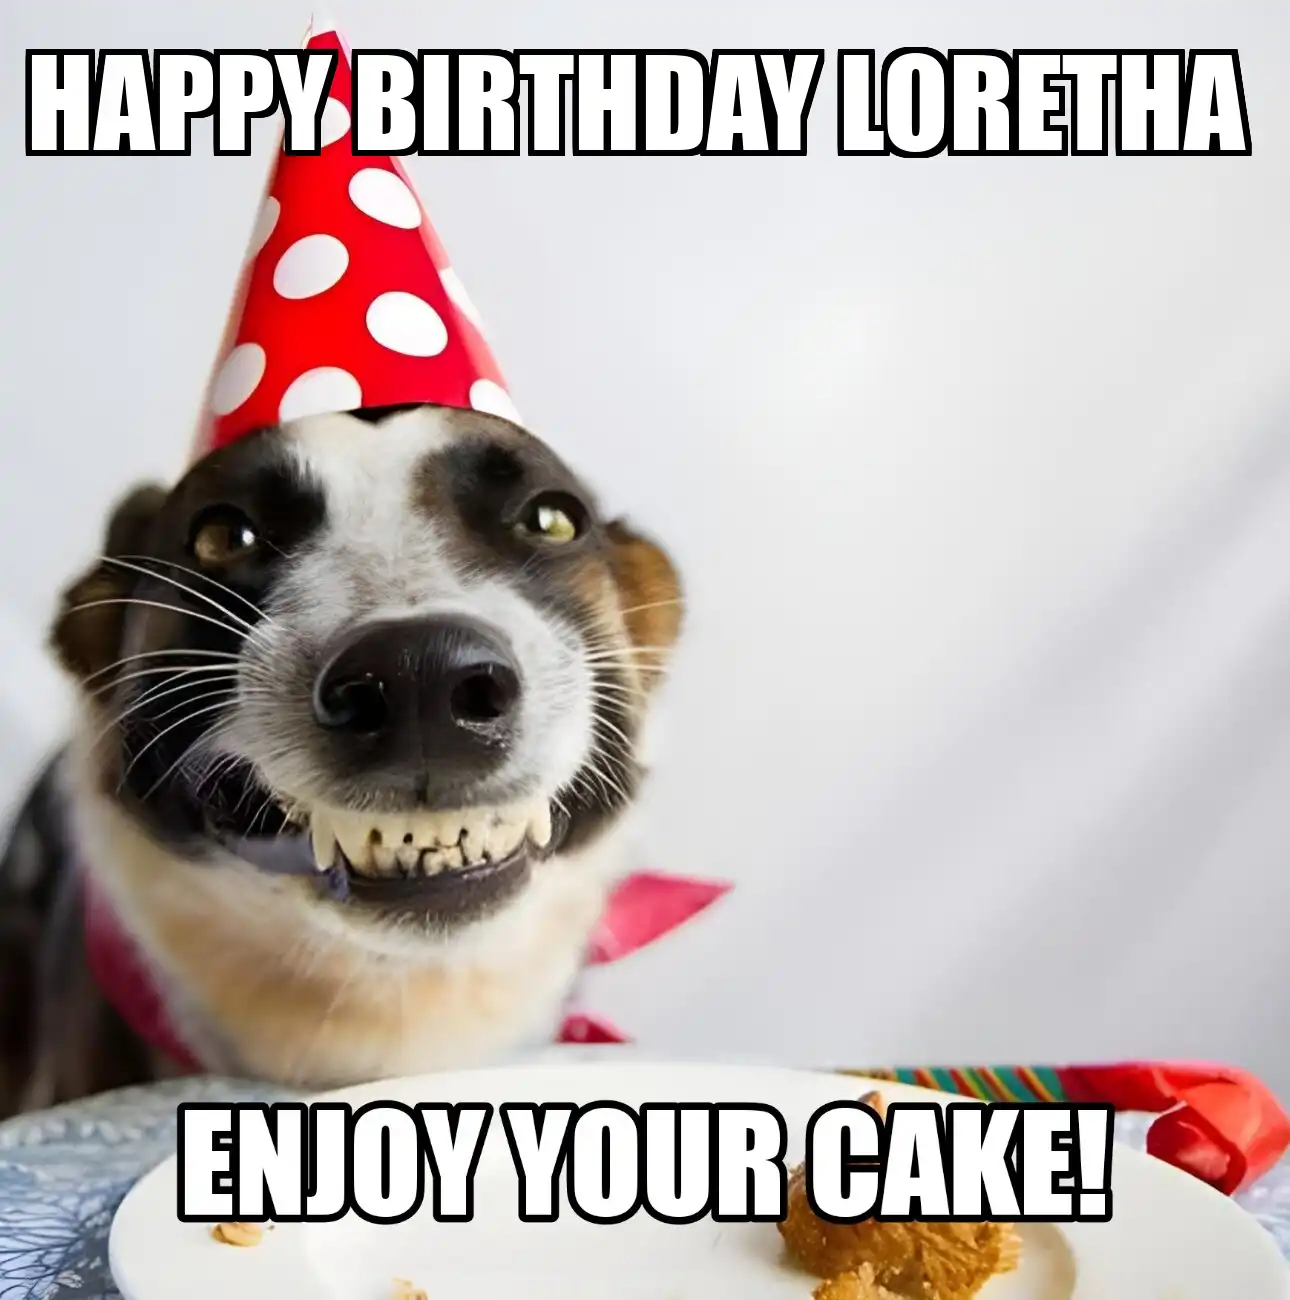 Happy Birthday Loretha Enjoy Your Cake Dog Meme